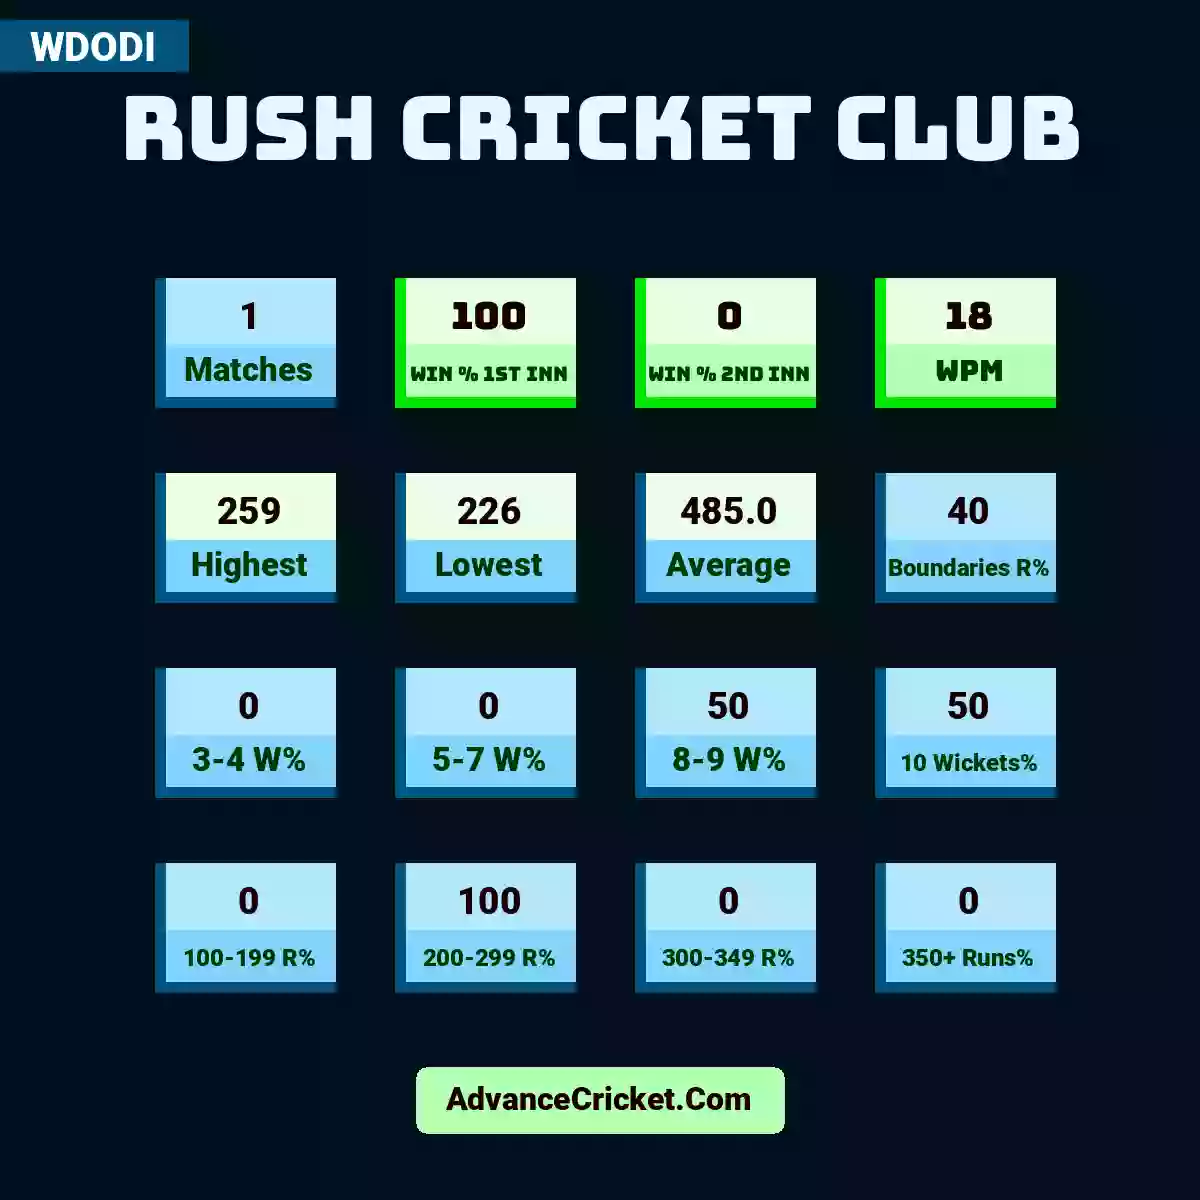 Image showing Rush Cricket Club with Matches: 1, Win % 1st Inn: 100, Win % 2nd Inn: 0, WPM: 18, Highest: 259, Lowest: 226, Average: 485.0, Boundaries R%: 40, 3-4 W%: 0, 5-7 W%: 0, 8-9 W%: 50, 10 Wickets%: 50, 100-199 R%: 0, 200-299 R%: 100, 300-349 R%: 0, 350+ Runs%: 0.